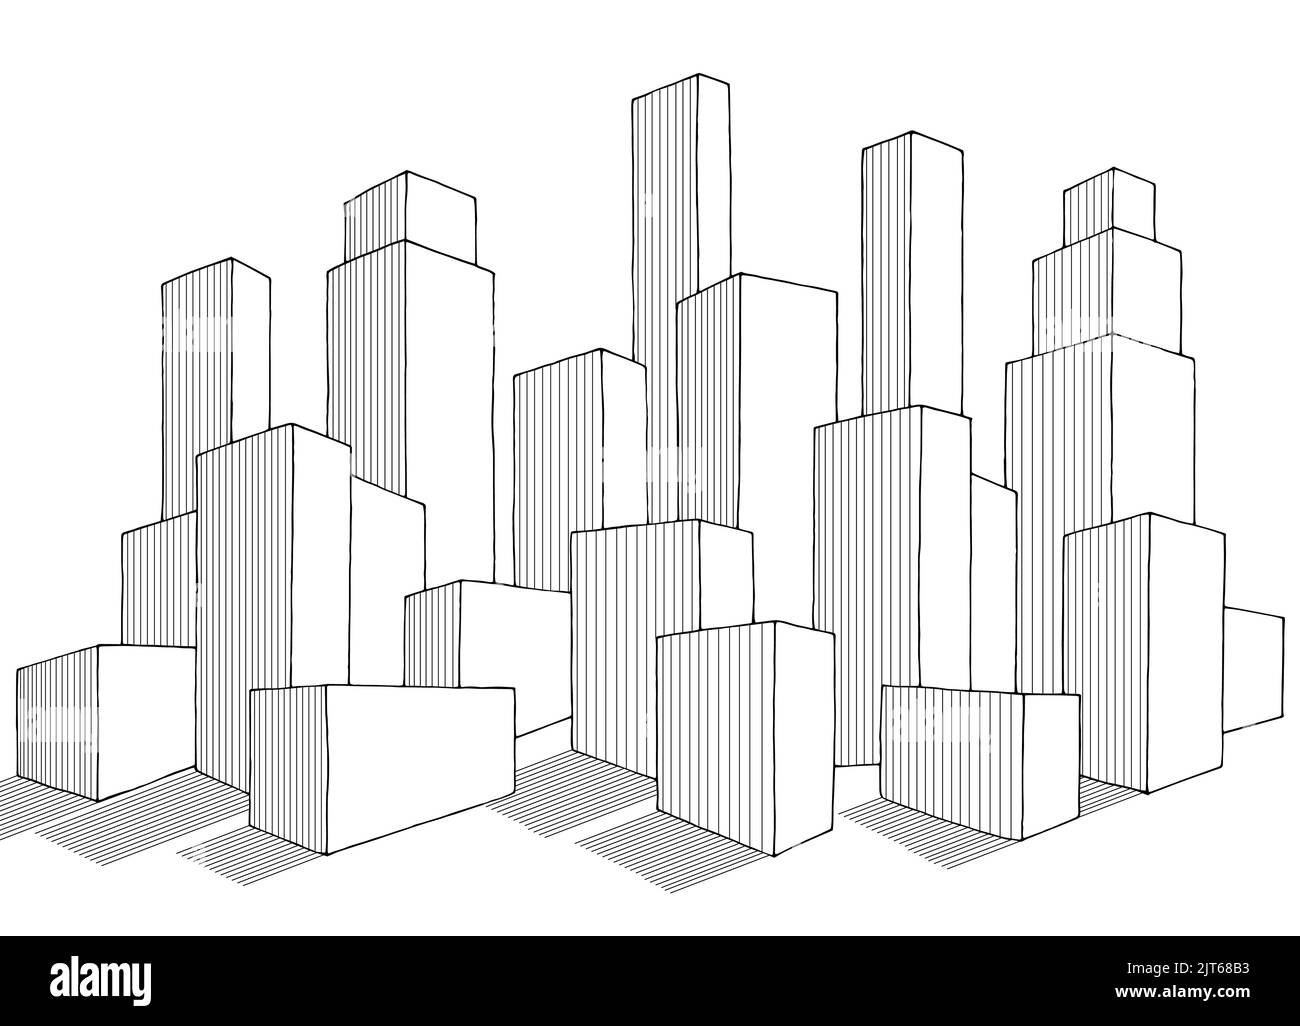 City Grafik schwarz weiß Stadtbild Skyline Skizze Illustration Vektor Stock Vektor